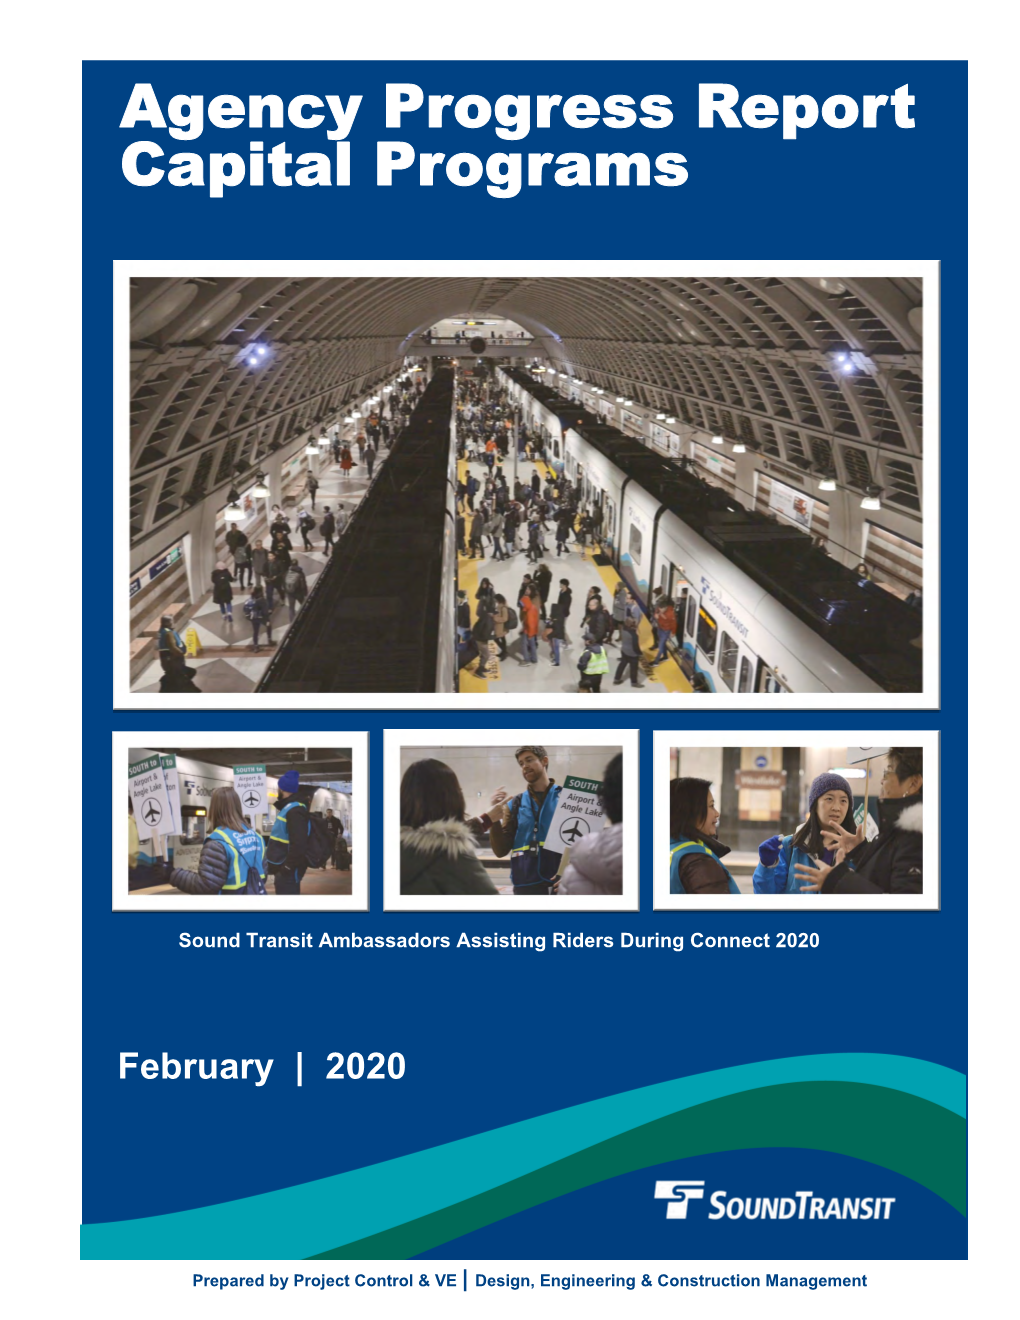 Agency Progress Report: February 2020